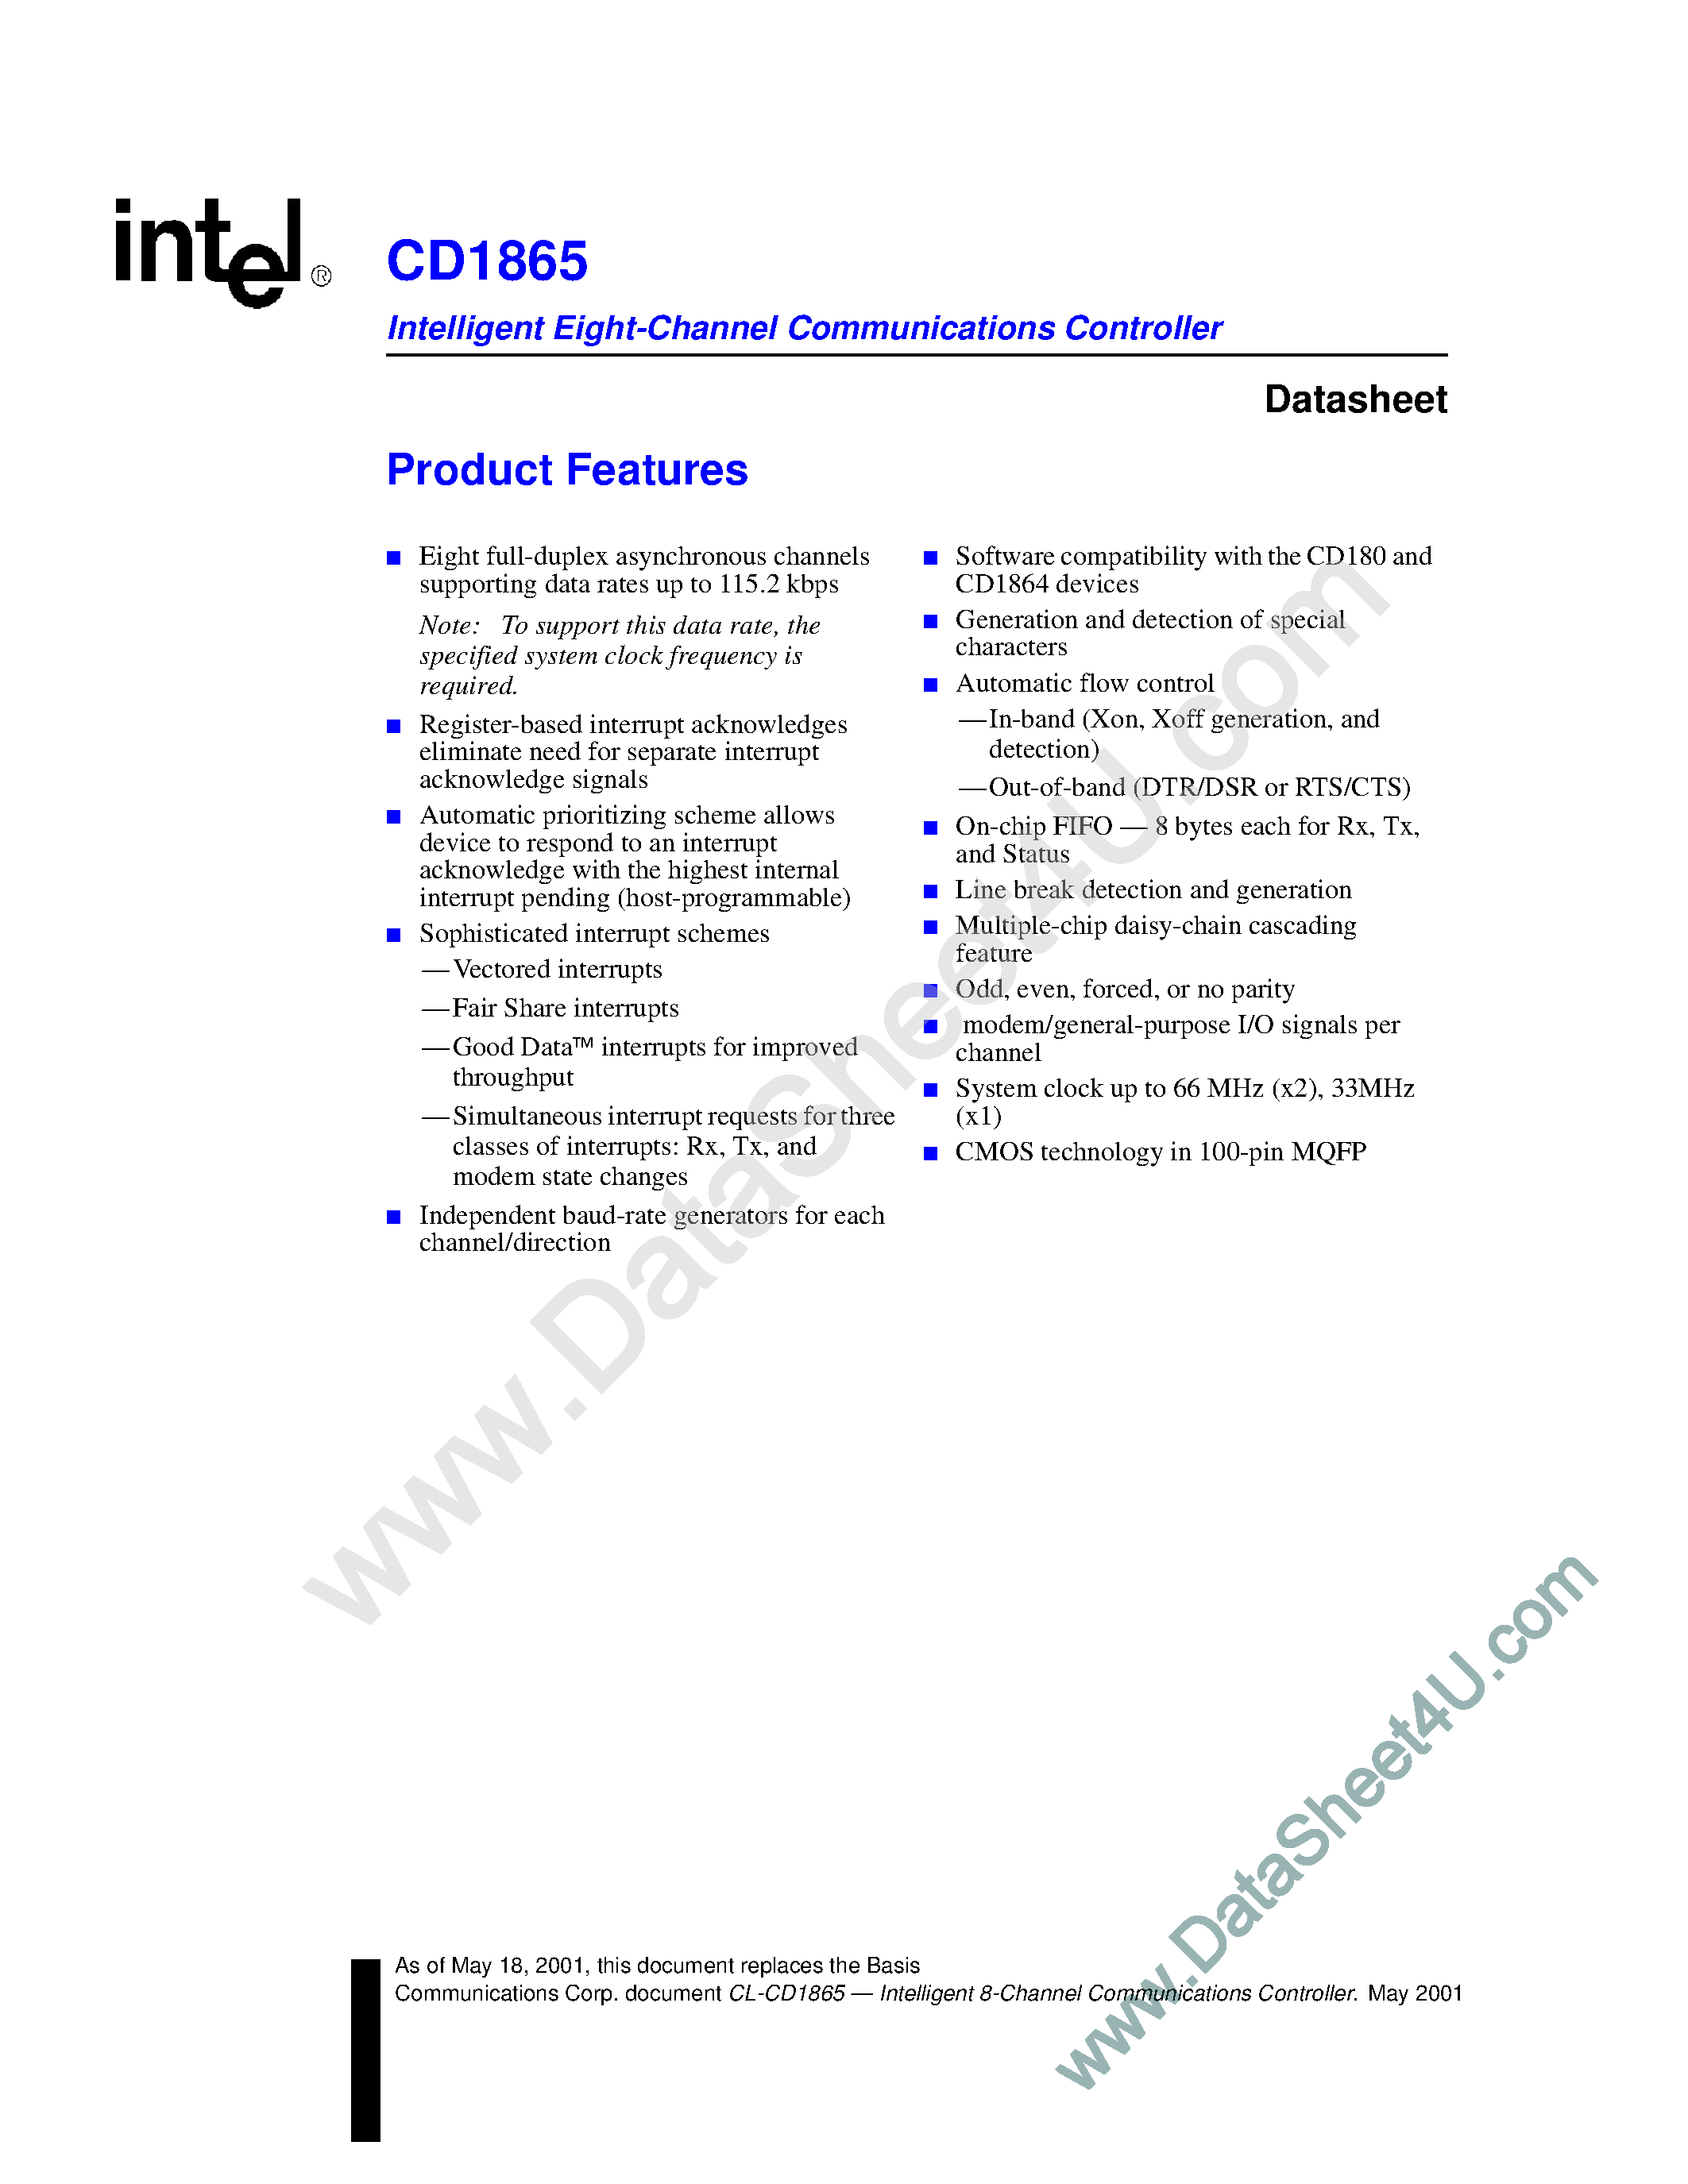 Даташит CD1865 - Intelligent Eight-channel Communications Controller страница 1